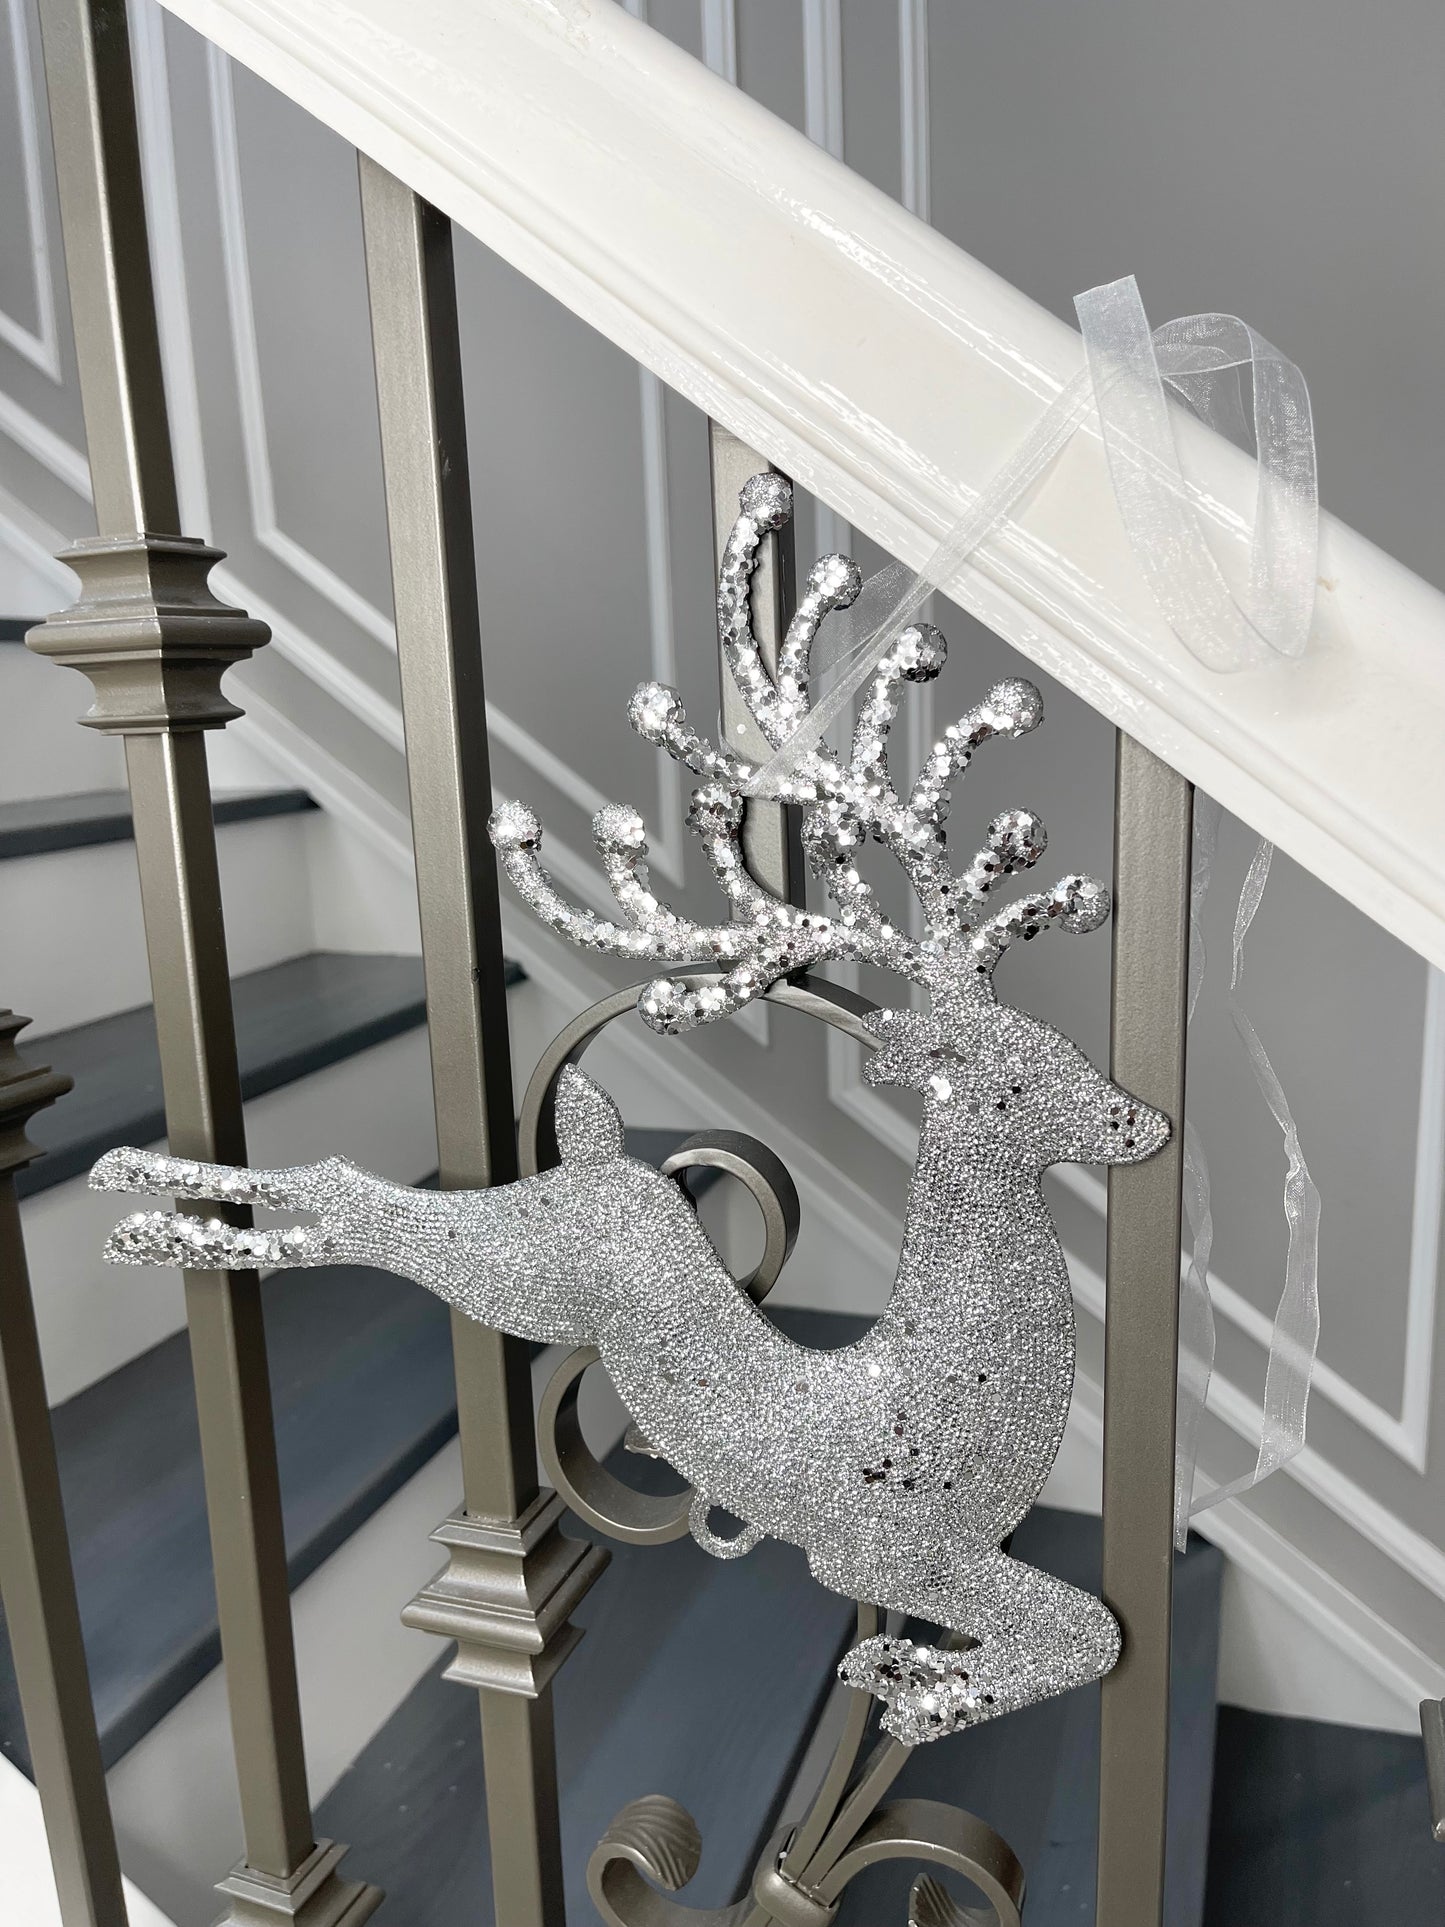 Sparkling Silver Reindeer Ornaments, 12 inch, Set of 5